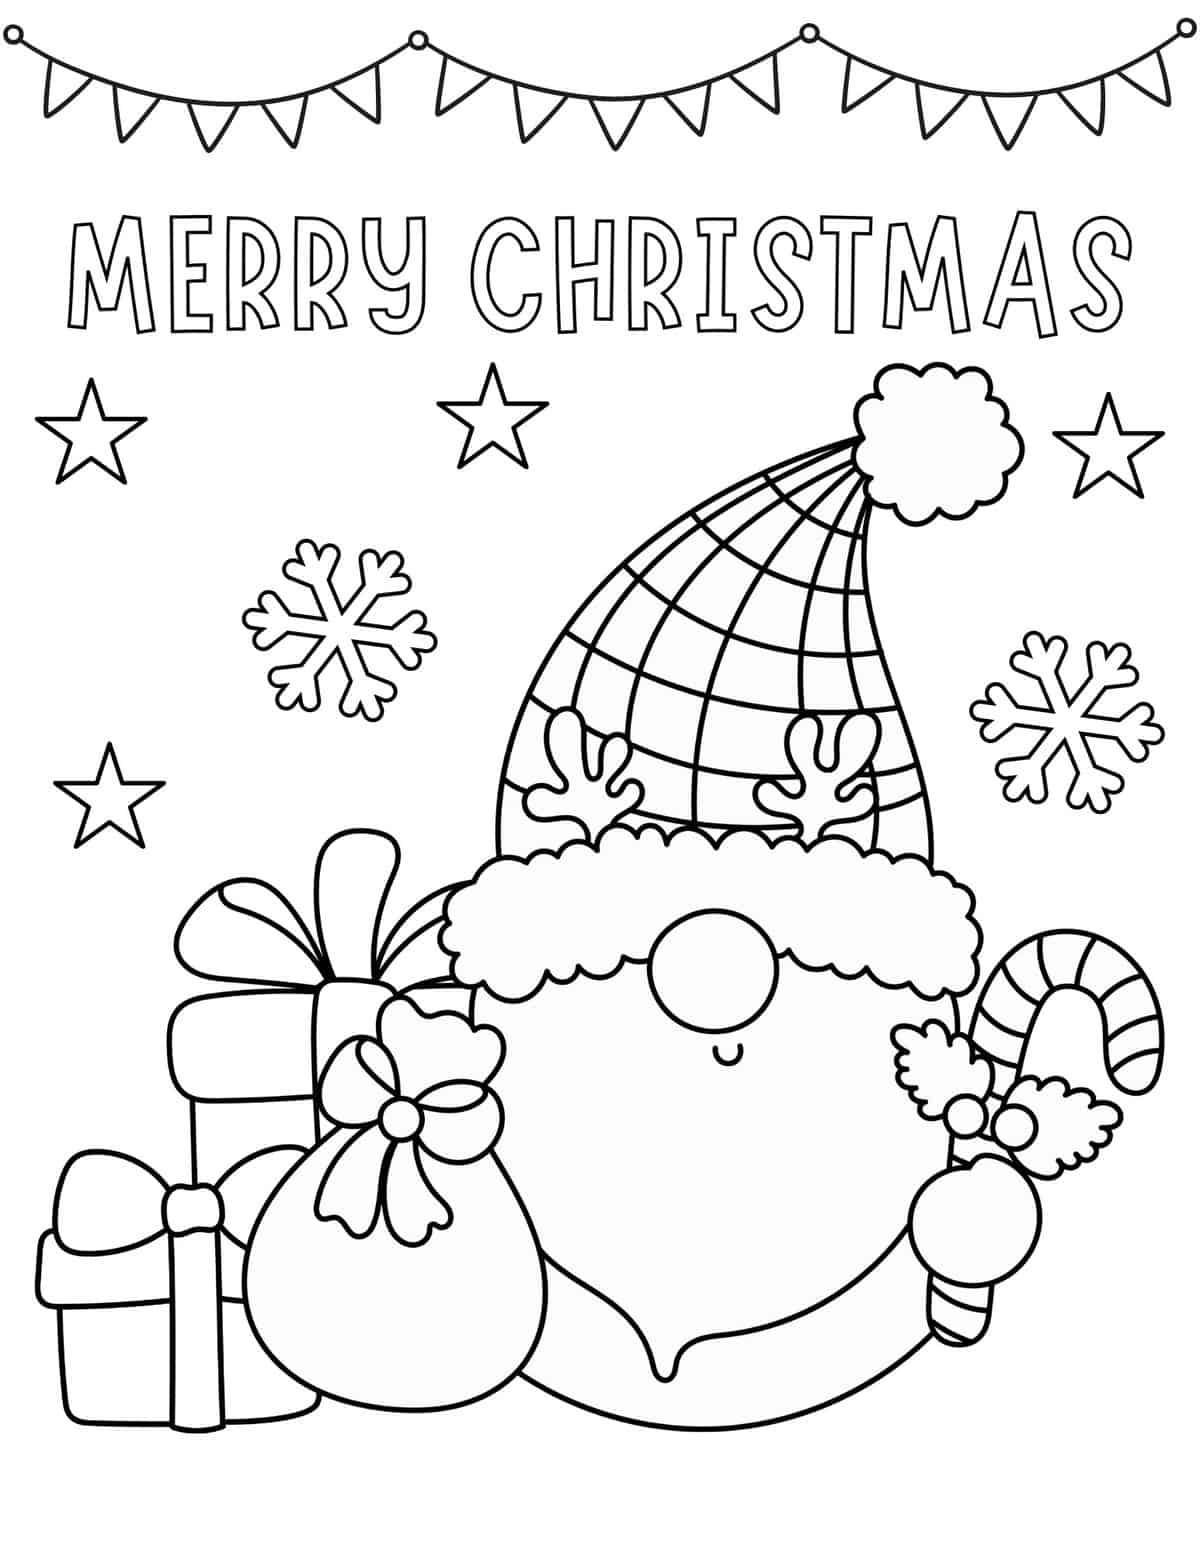 Free Printable Christmas Coloring Pages - Printable JD